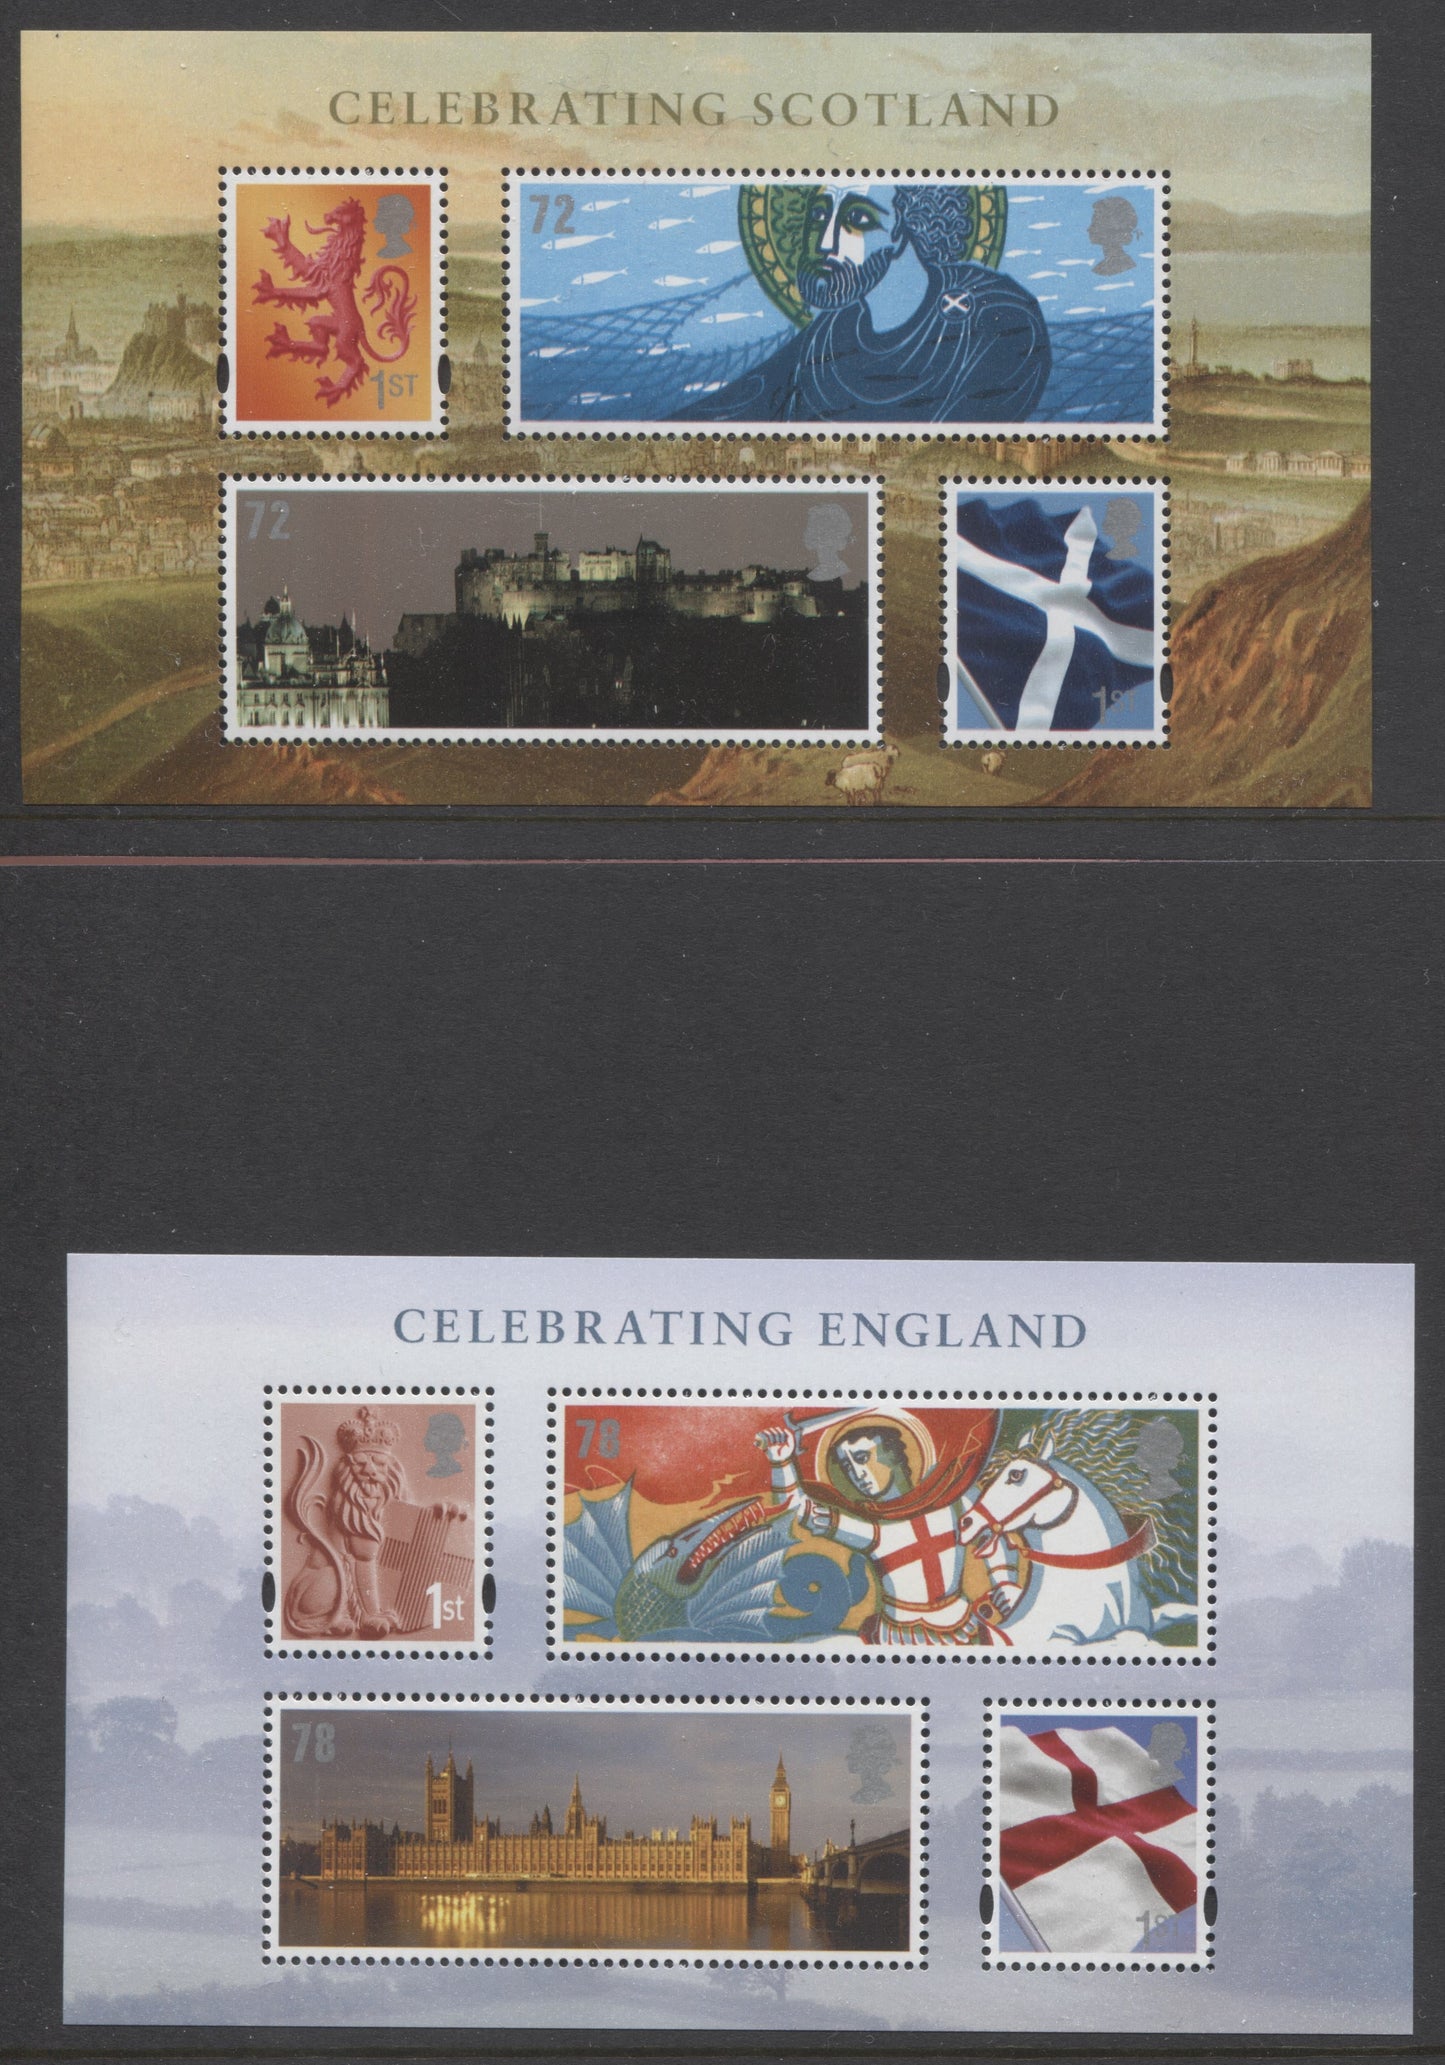 Lot 368 Great Britain - England & Scotland SG#MSEN50 & MSS153 2006-2007 Celebrating England and Scotland Souvenir Sheets, VFNH Examples, Converted SG Concise $13.20